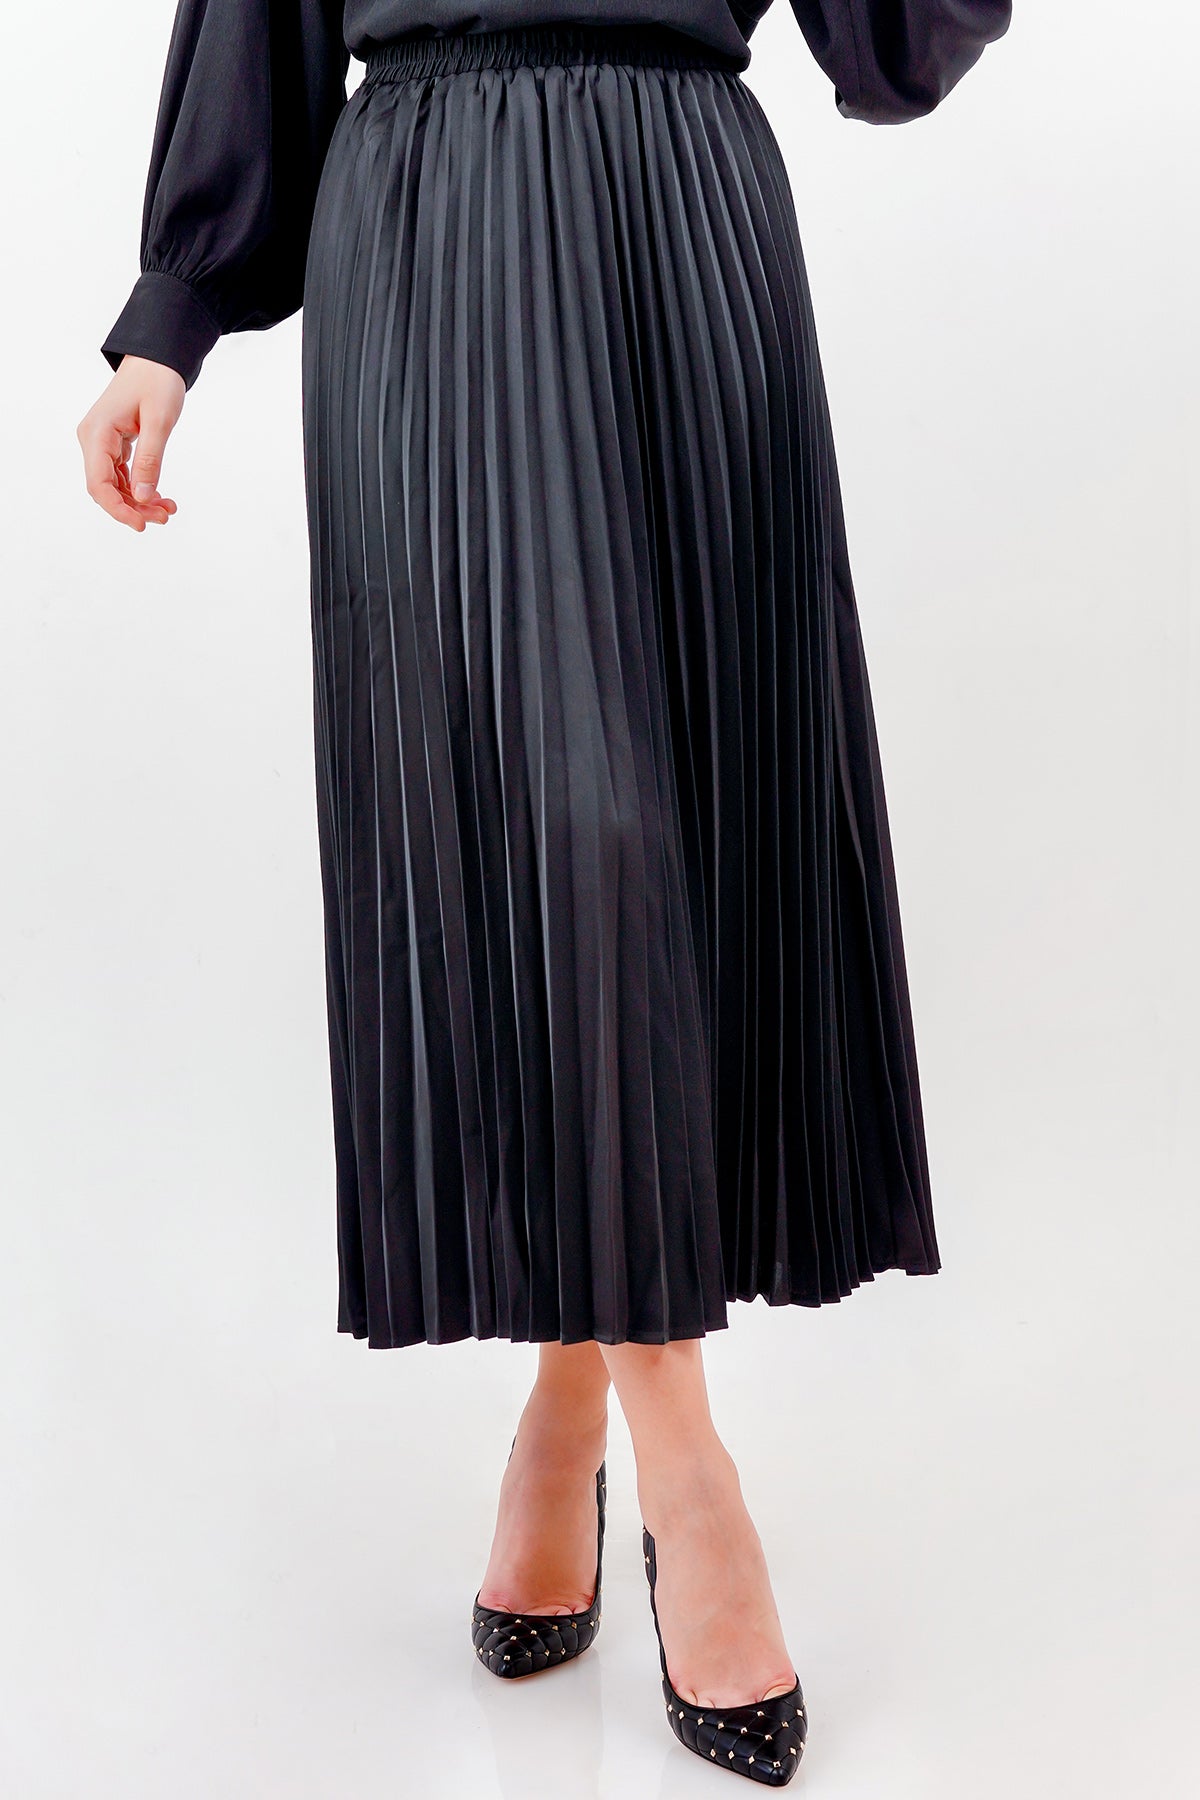 Satin Pleats Skirt - Black